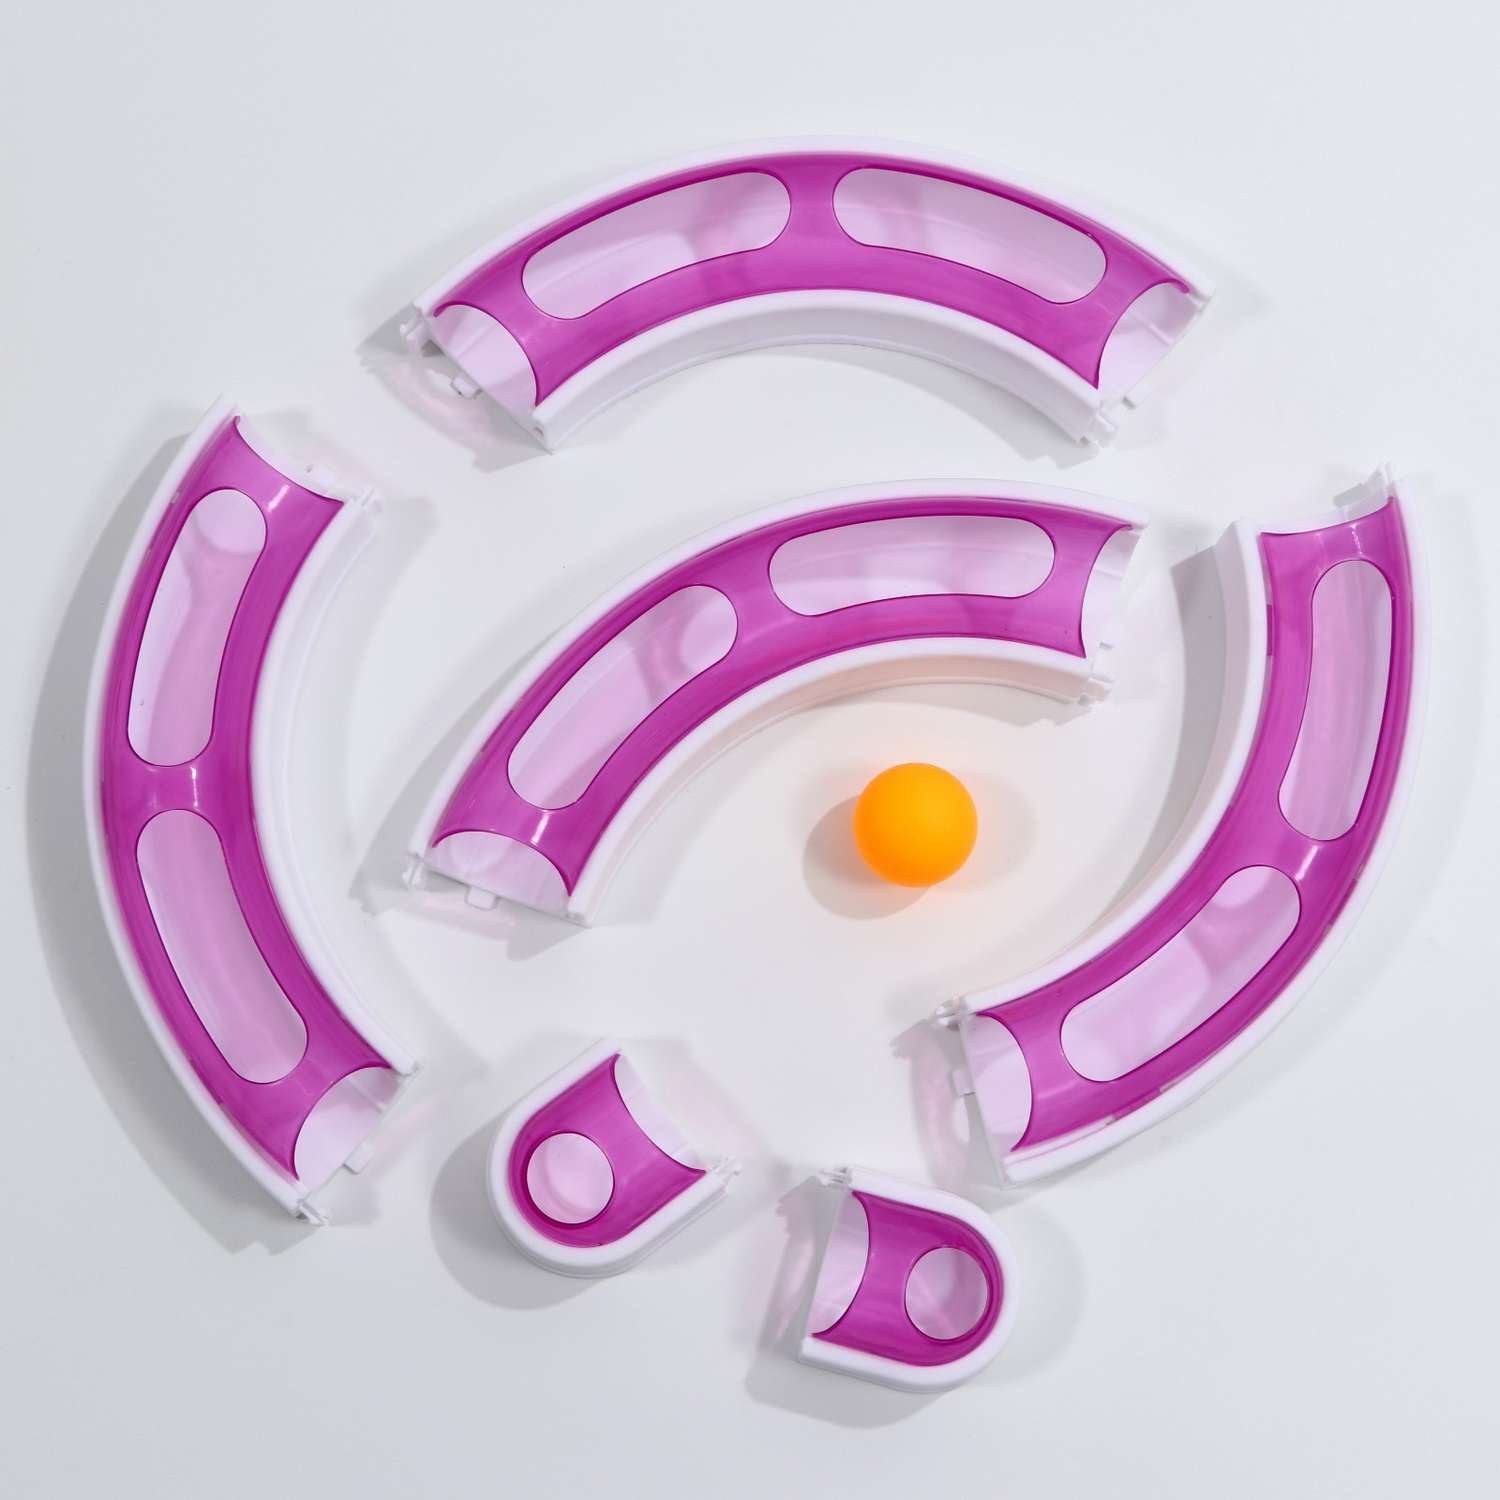 Игрушкка Пижон 2-в-1 Круг и волна с 2 вариантами сборки. Белая/фиолетовая - фото 1